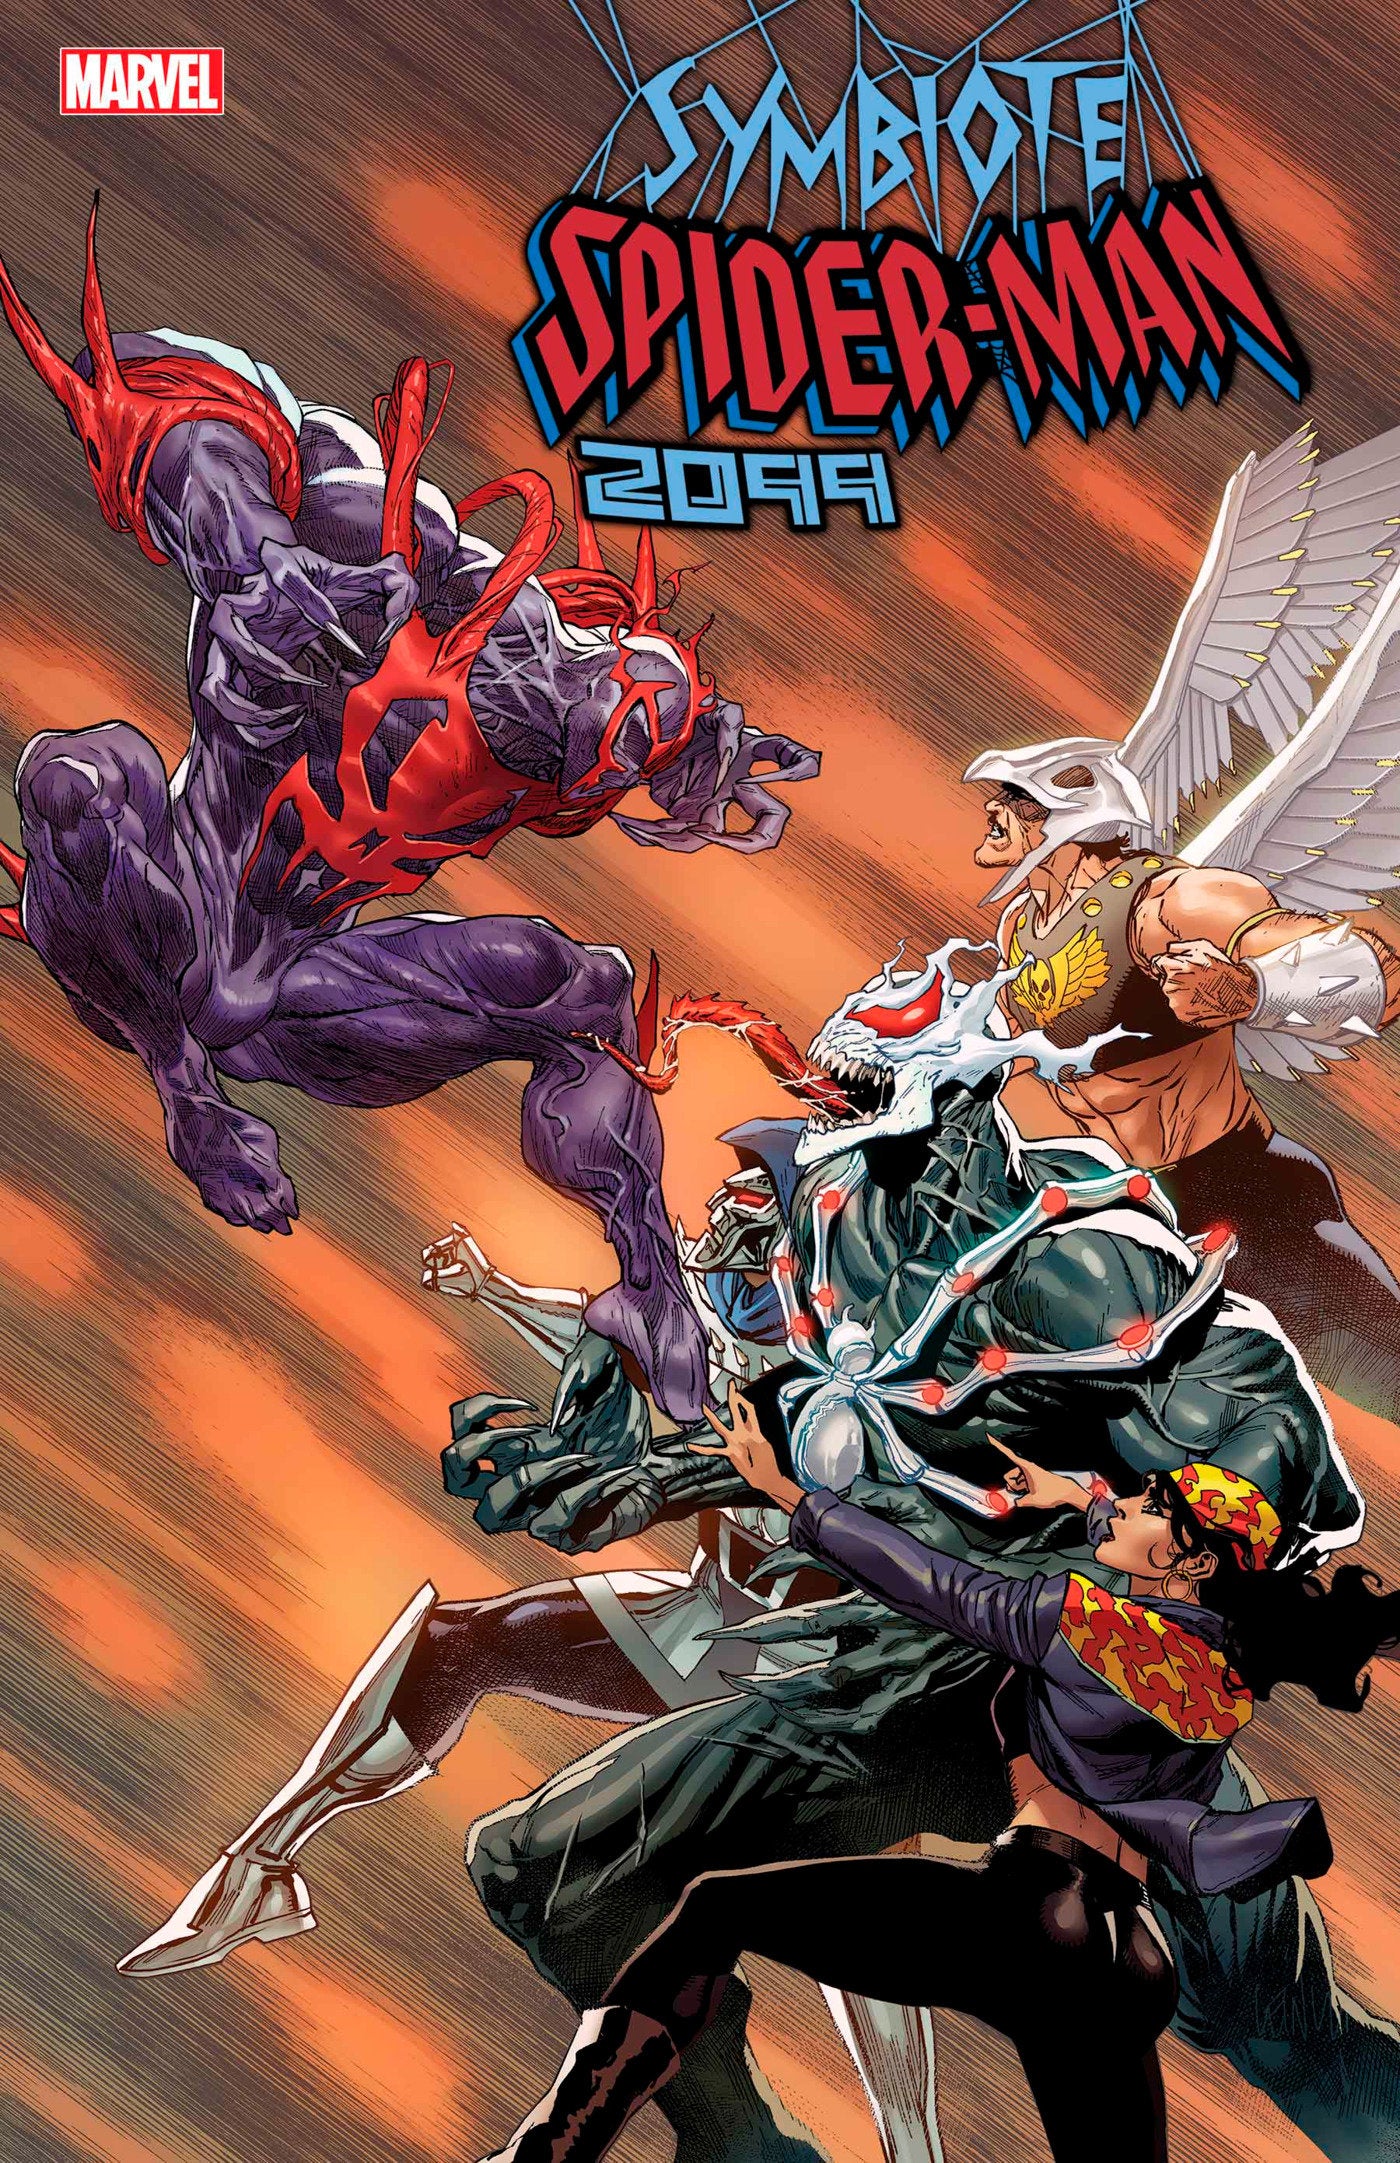 SYMBIOTE SPIDER-MAN 2099 #4 (OF 5) (26 Jun Release)